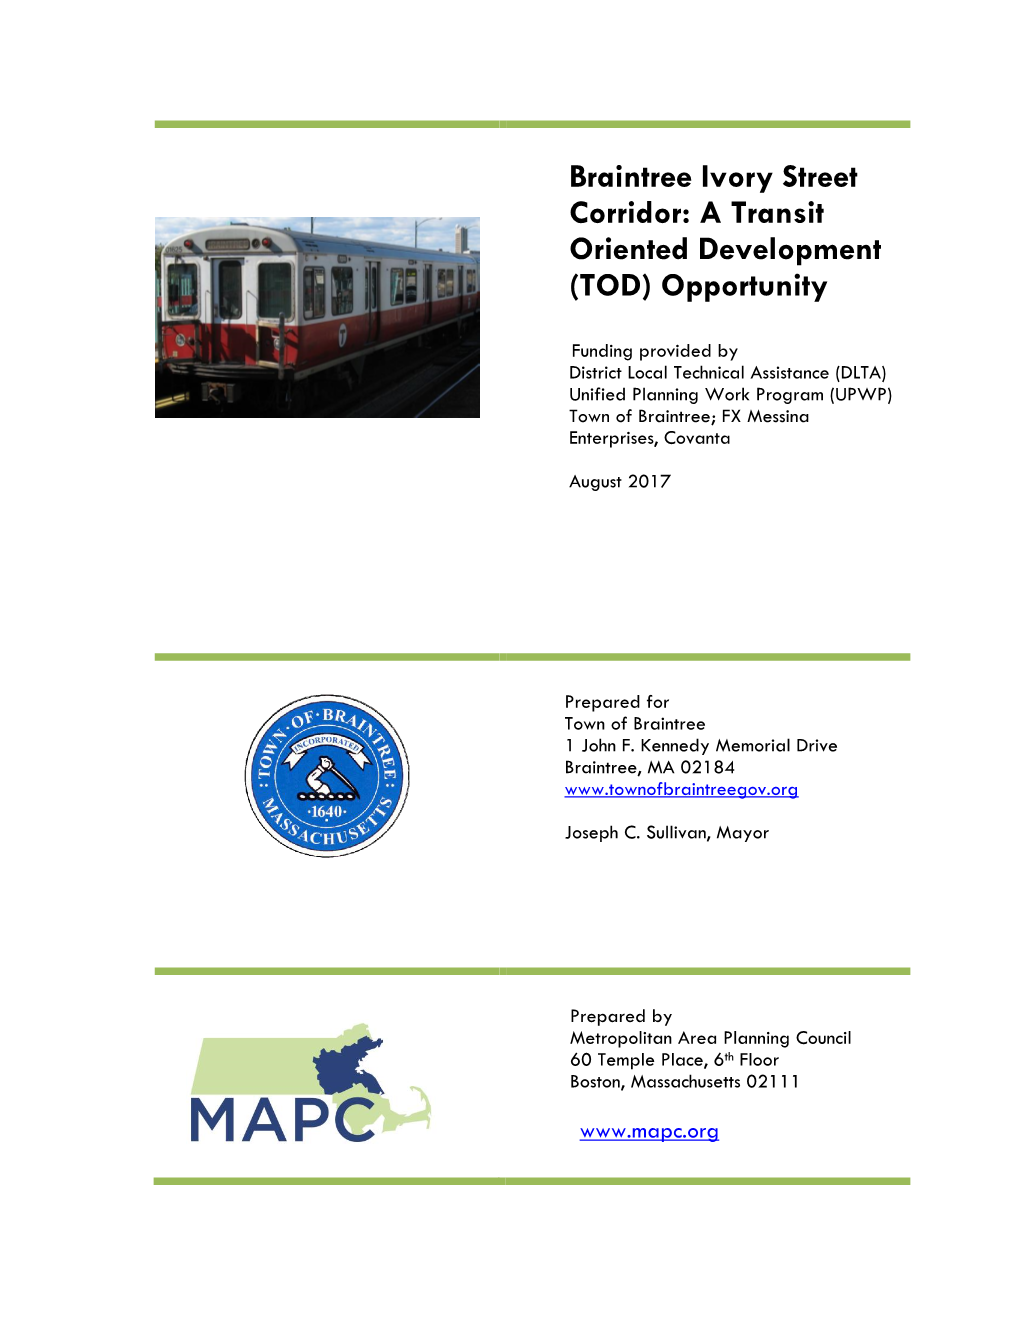 Braintree Ivory Street Corridor: a Transit Oriented Development (TOD) Opportunity